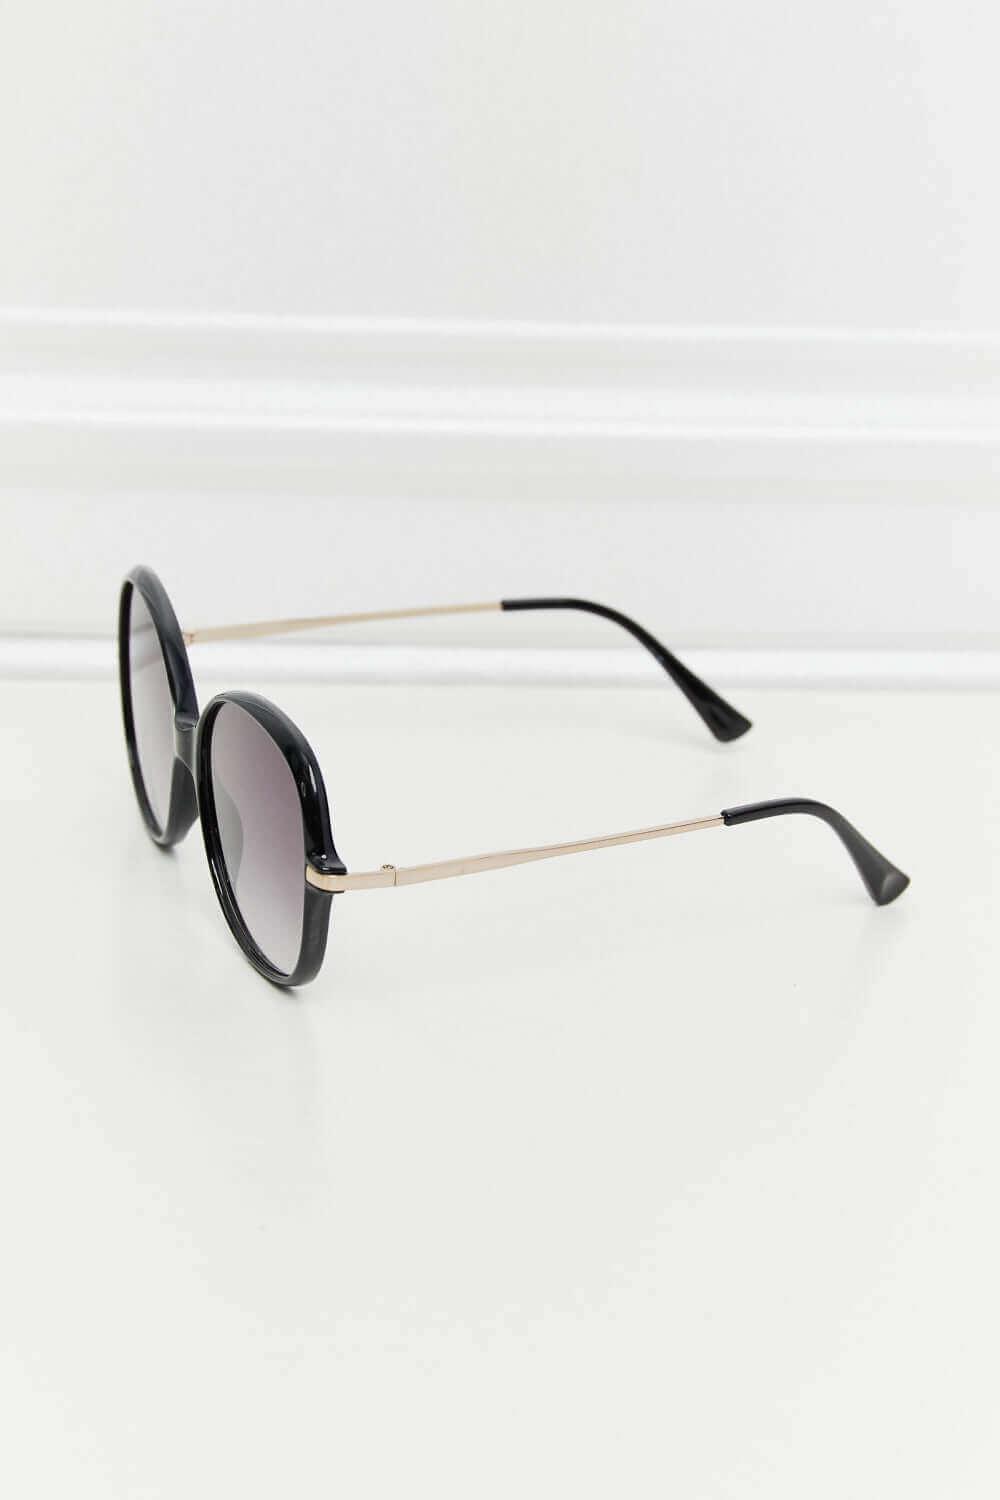 Metal-Plastic Hybrid Full Rim Sunglasses - Samslivos